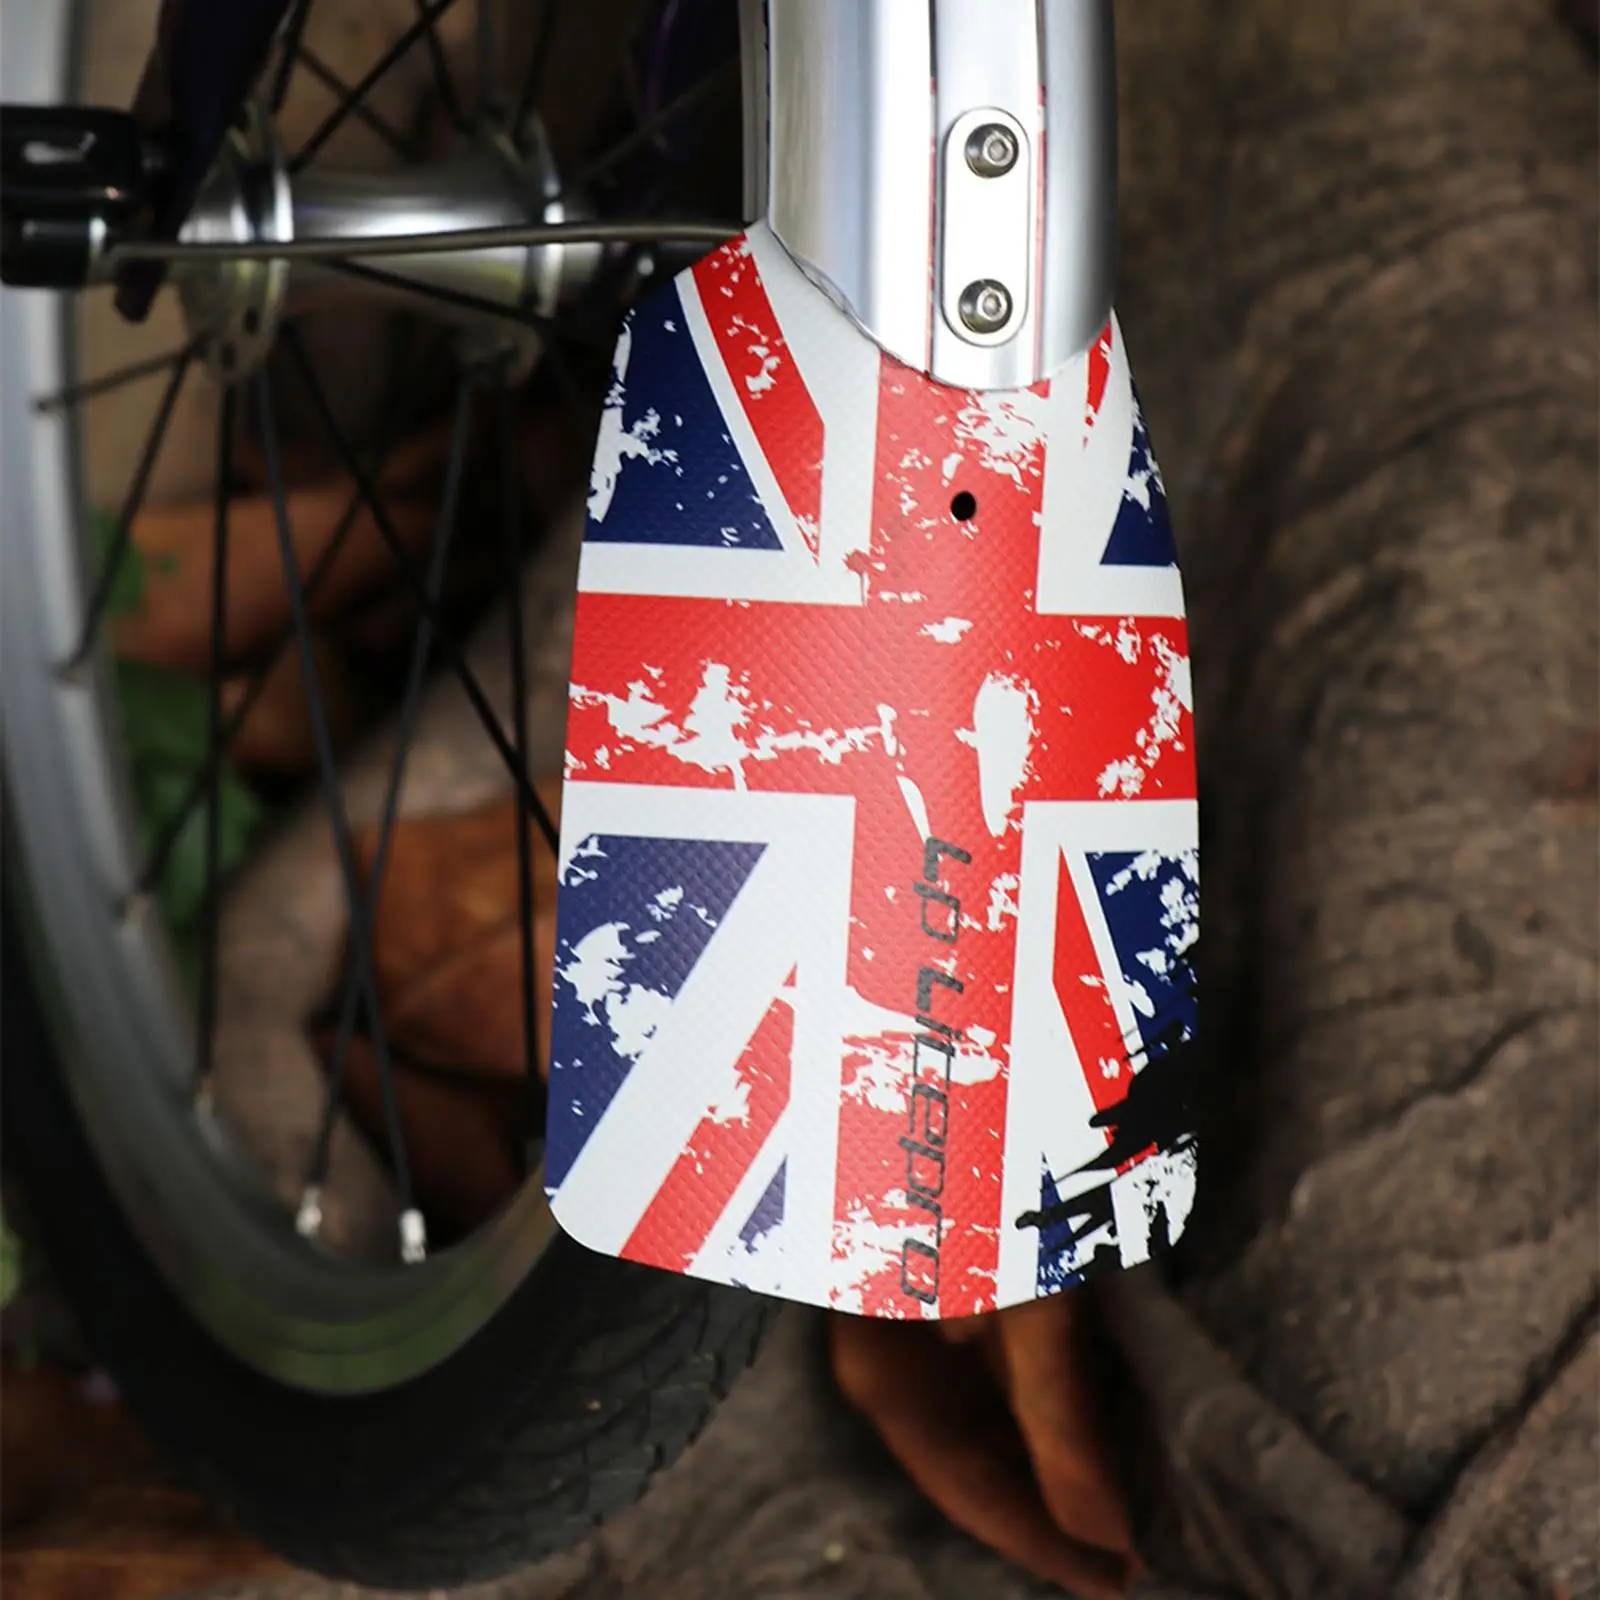 Folding Bike Universal Rain Protection Mudapron Mud Guard Bike Accessories